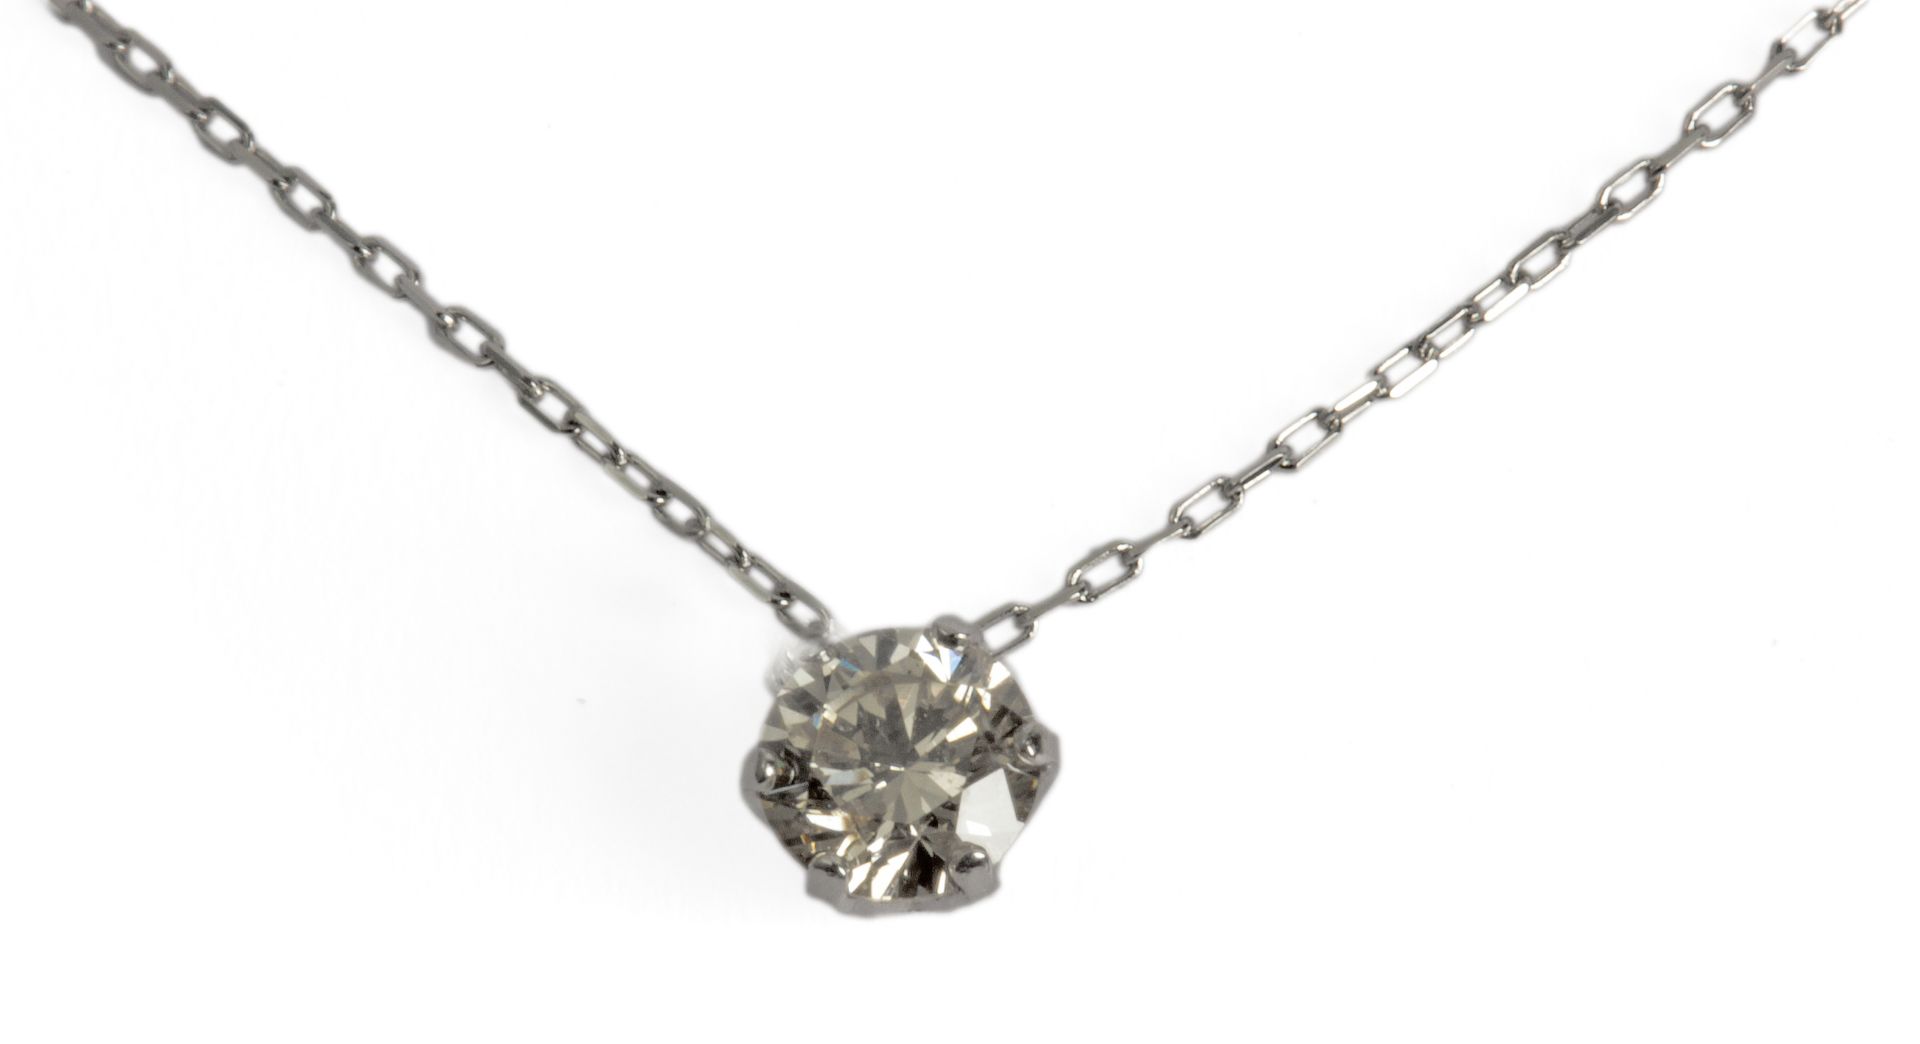 A diamond necklace. A 20 ct. brilliant cut single diamond in a platinum bezel setting with a platin